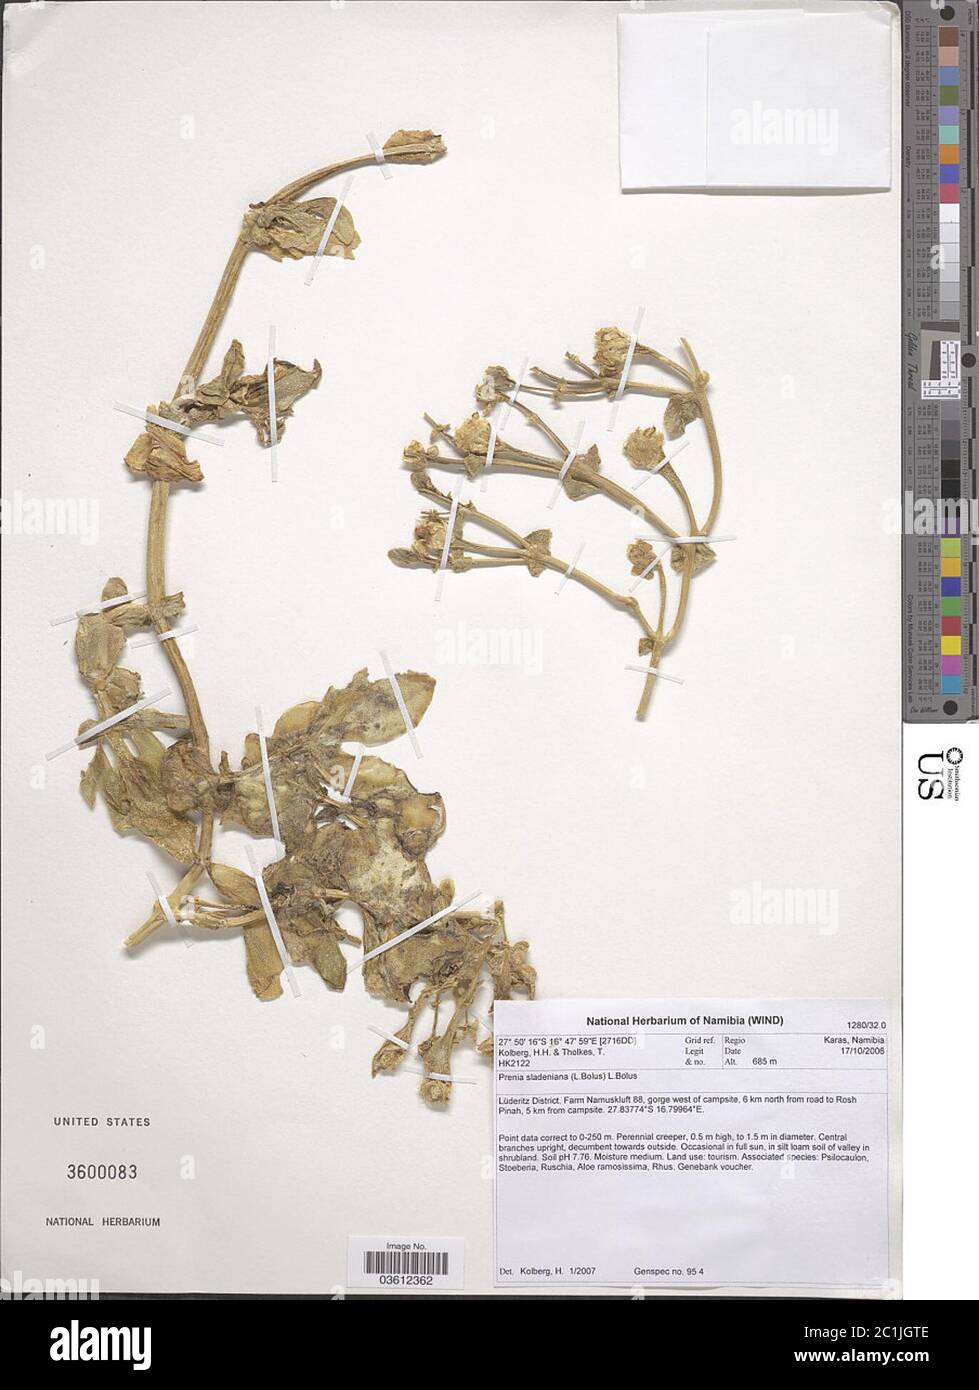 Mesembryanthemum sladenianum L Bolus Mesembryanthemum sladenianum L Bolus. Stock Photo